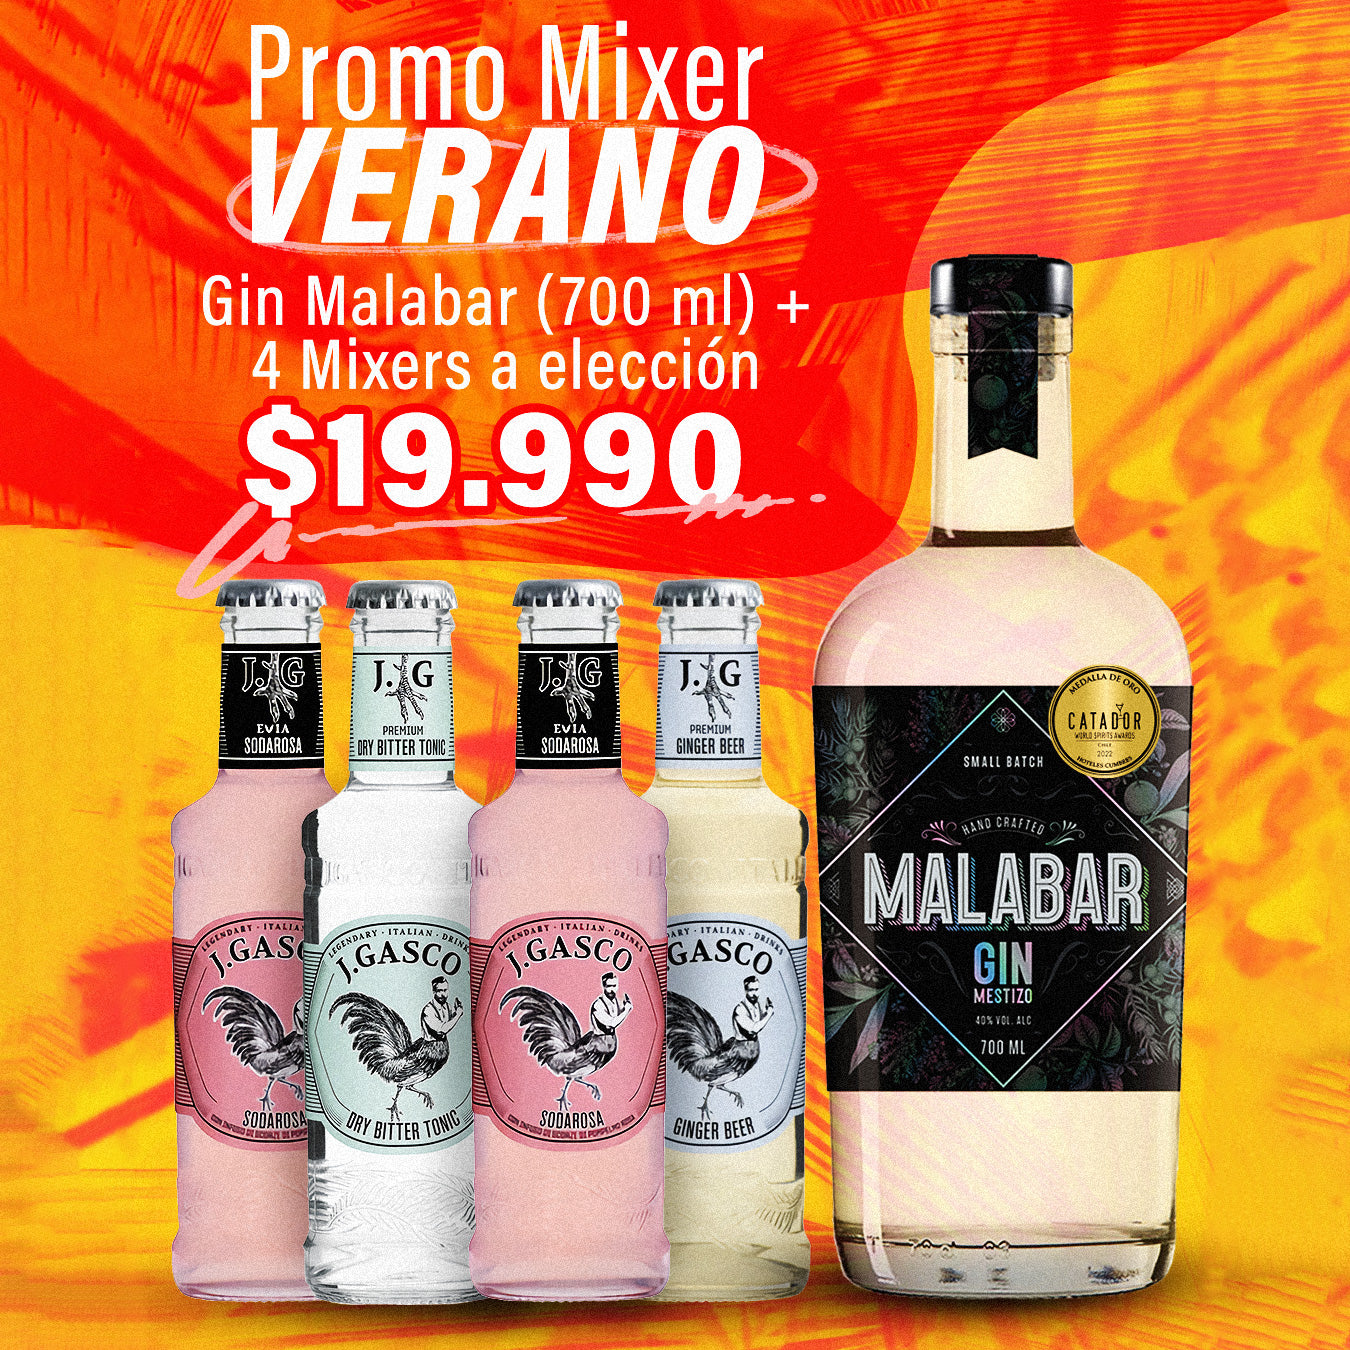 Promo Mixers Verano - Gin Malabar (700 ml) + 4 Mixers